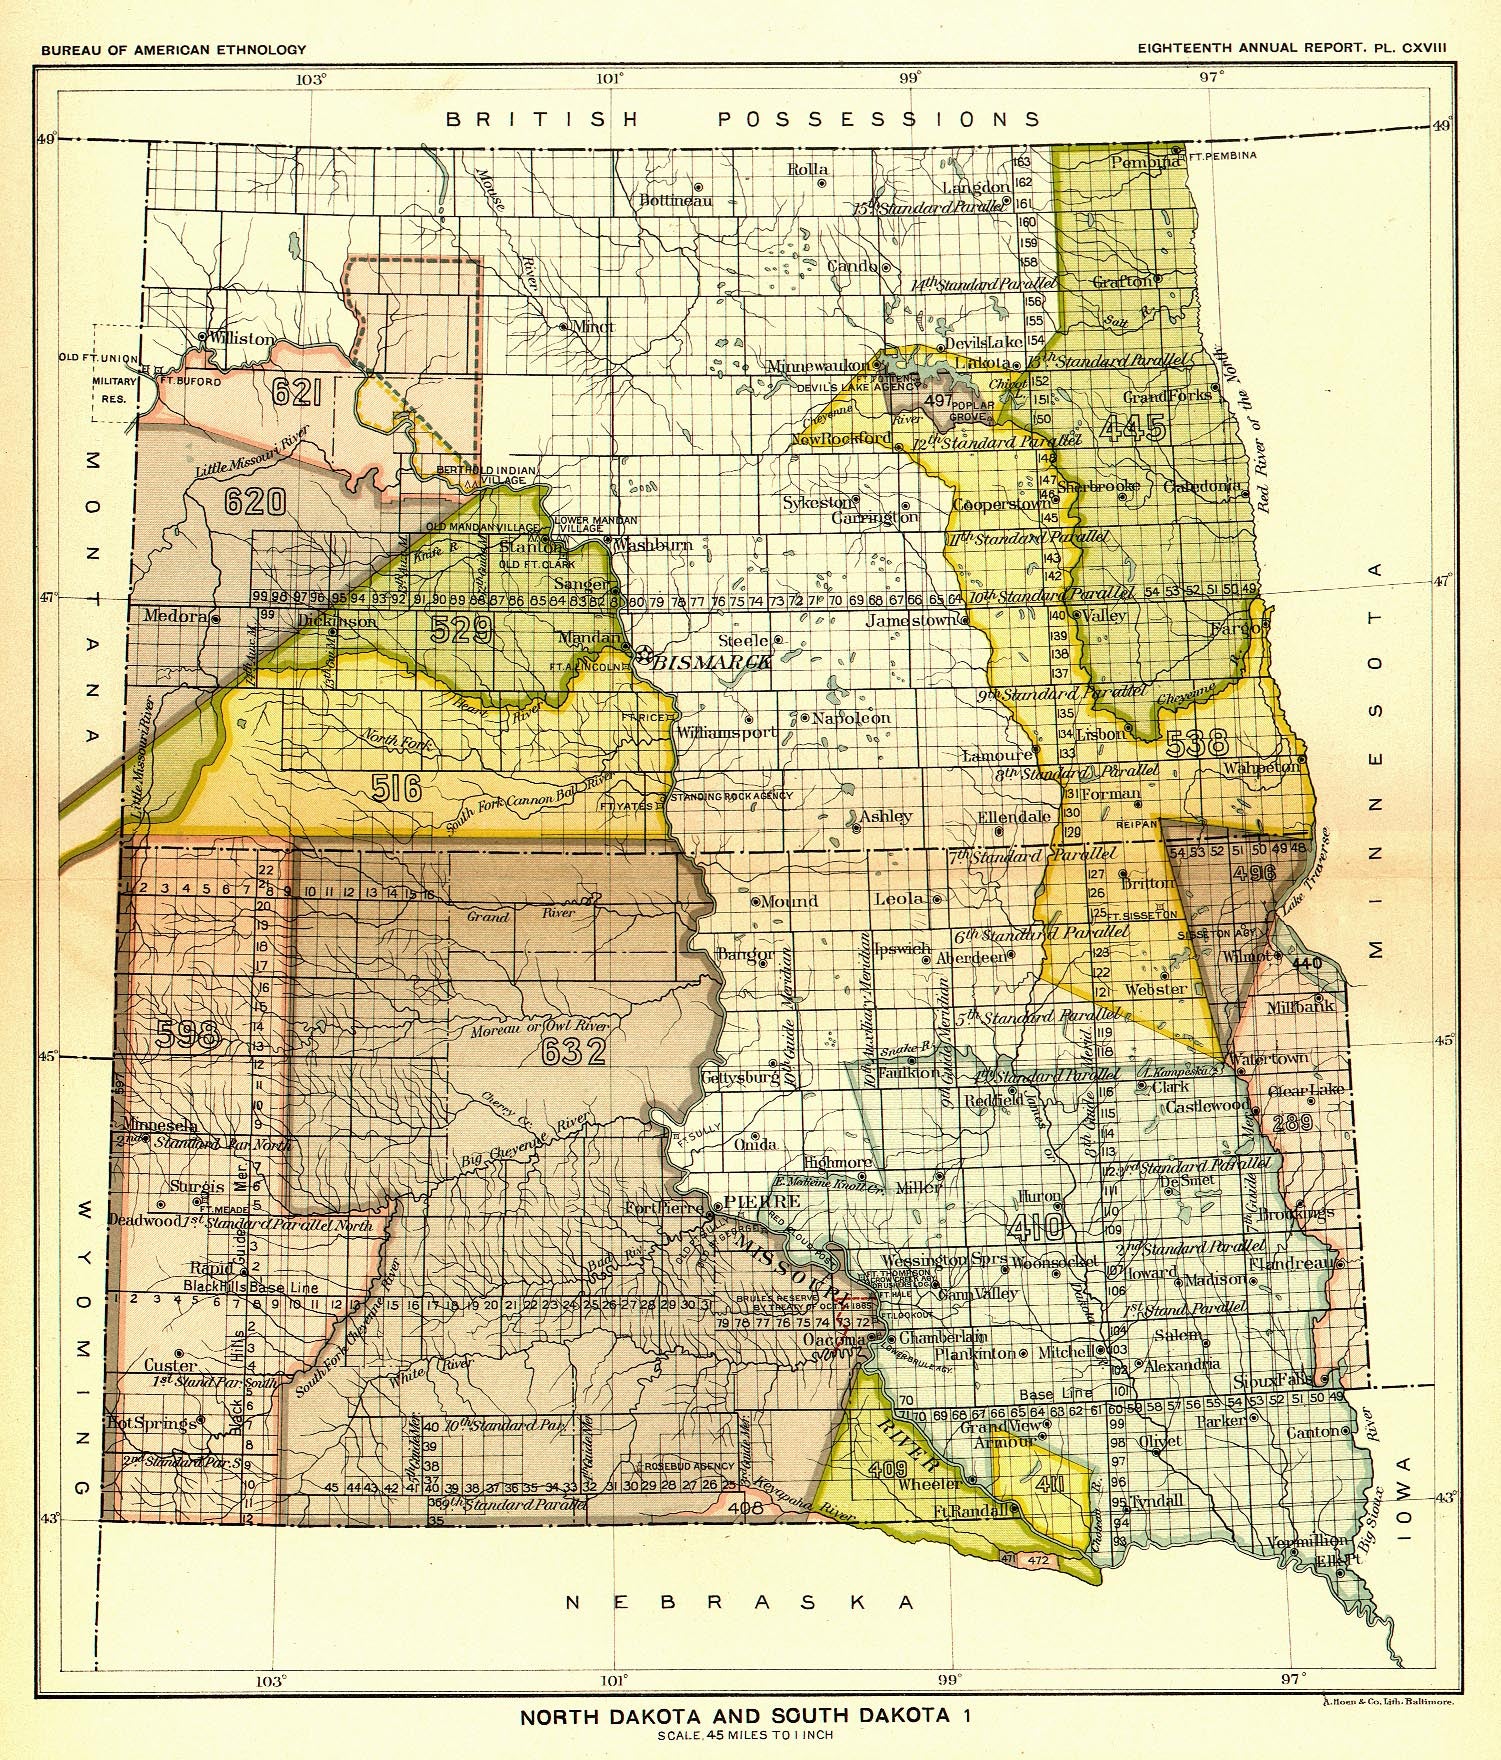 North Dakota Censuses & Substitute Name Lists 1832-2015 - PDF eBook